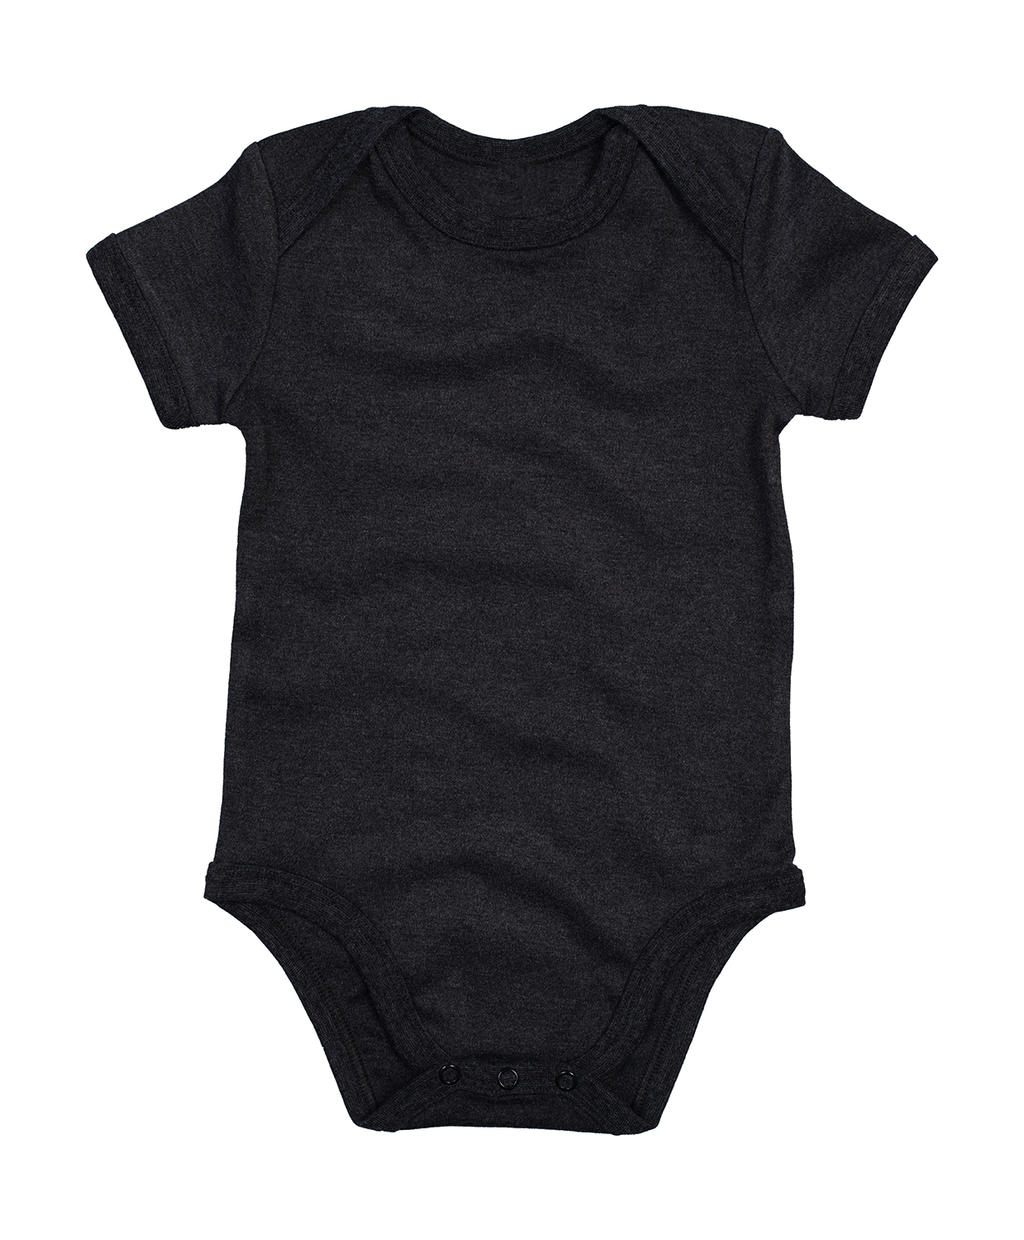  Baby Bodysuit in Farbe Charcoal Grey Melange Organic